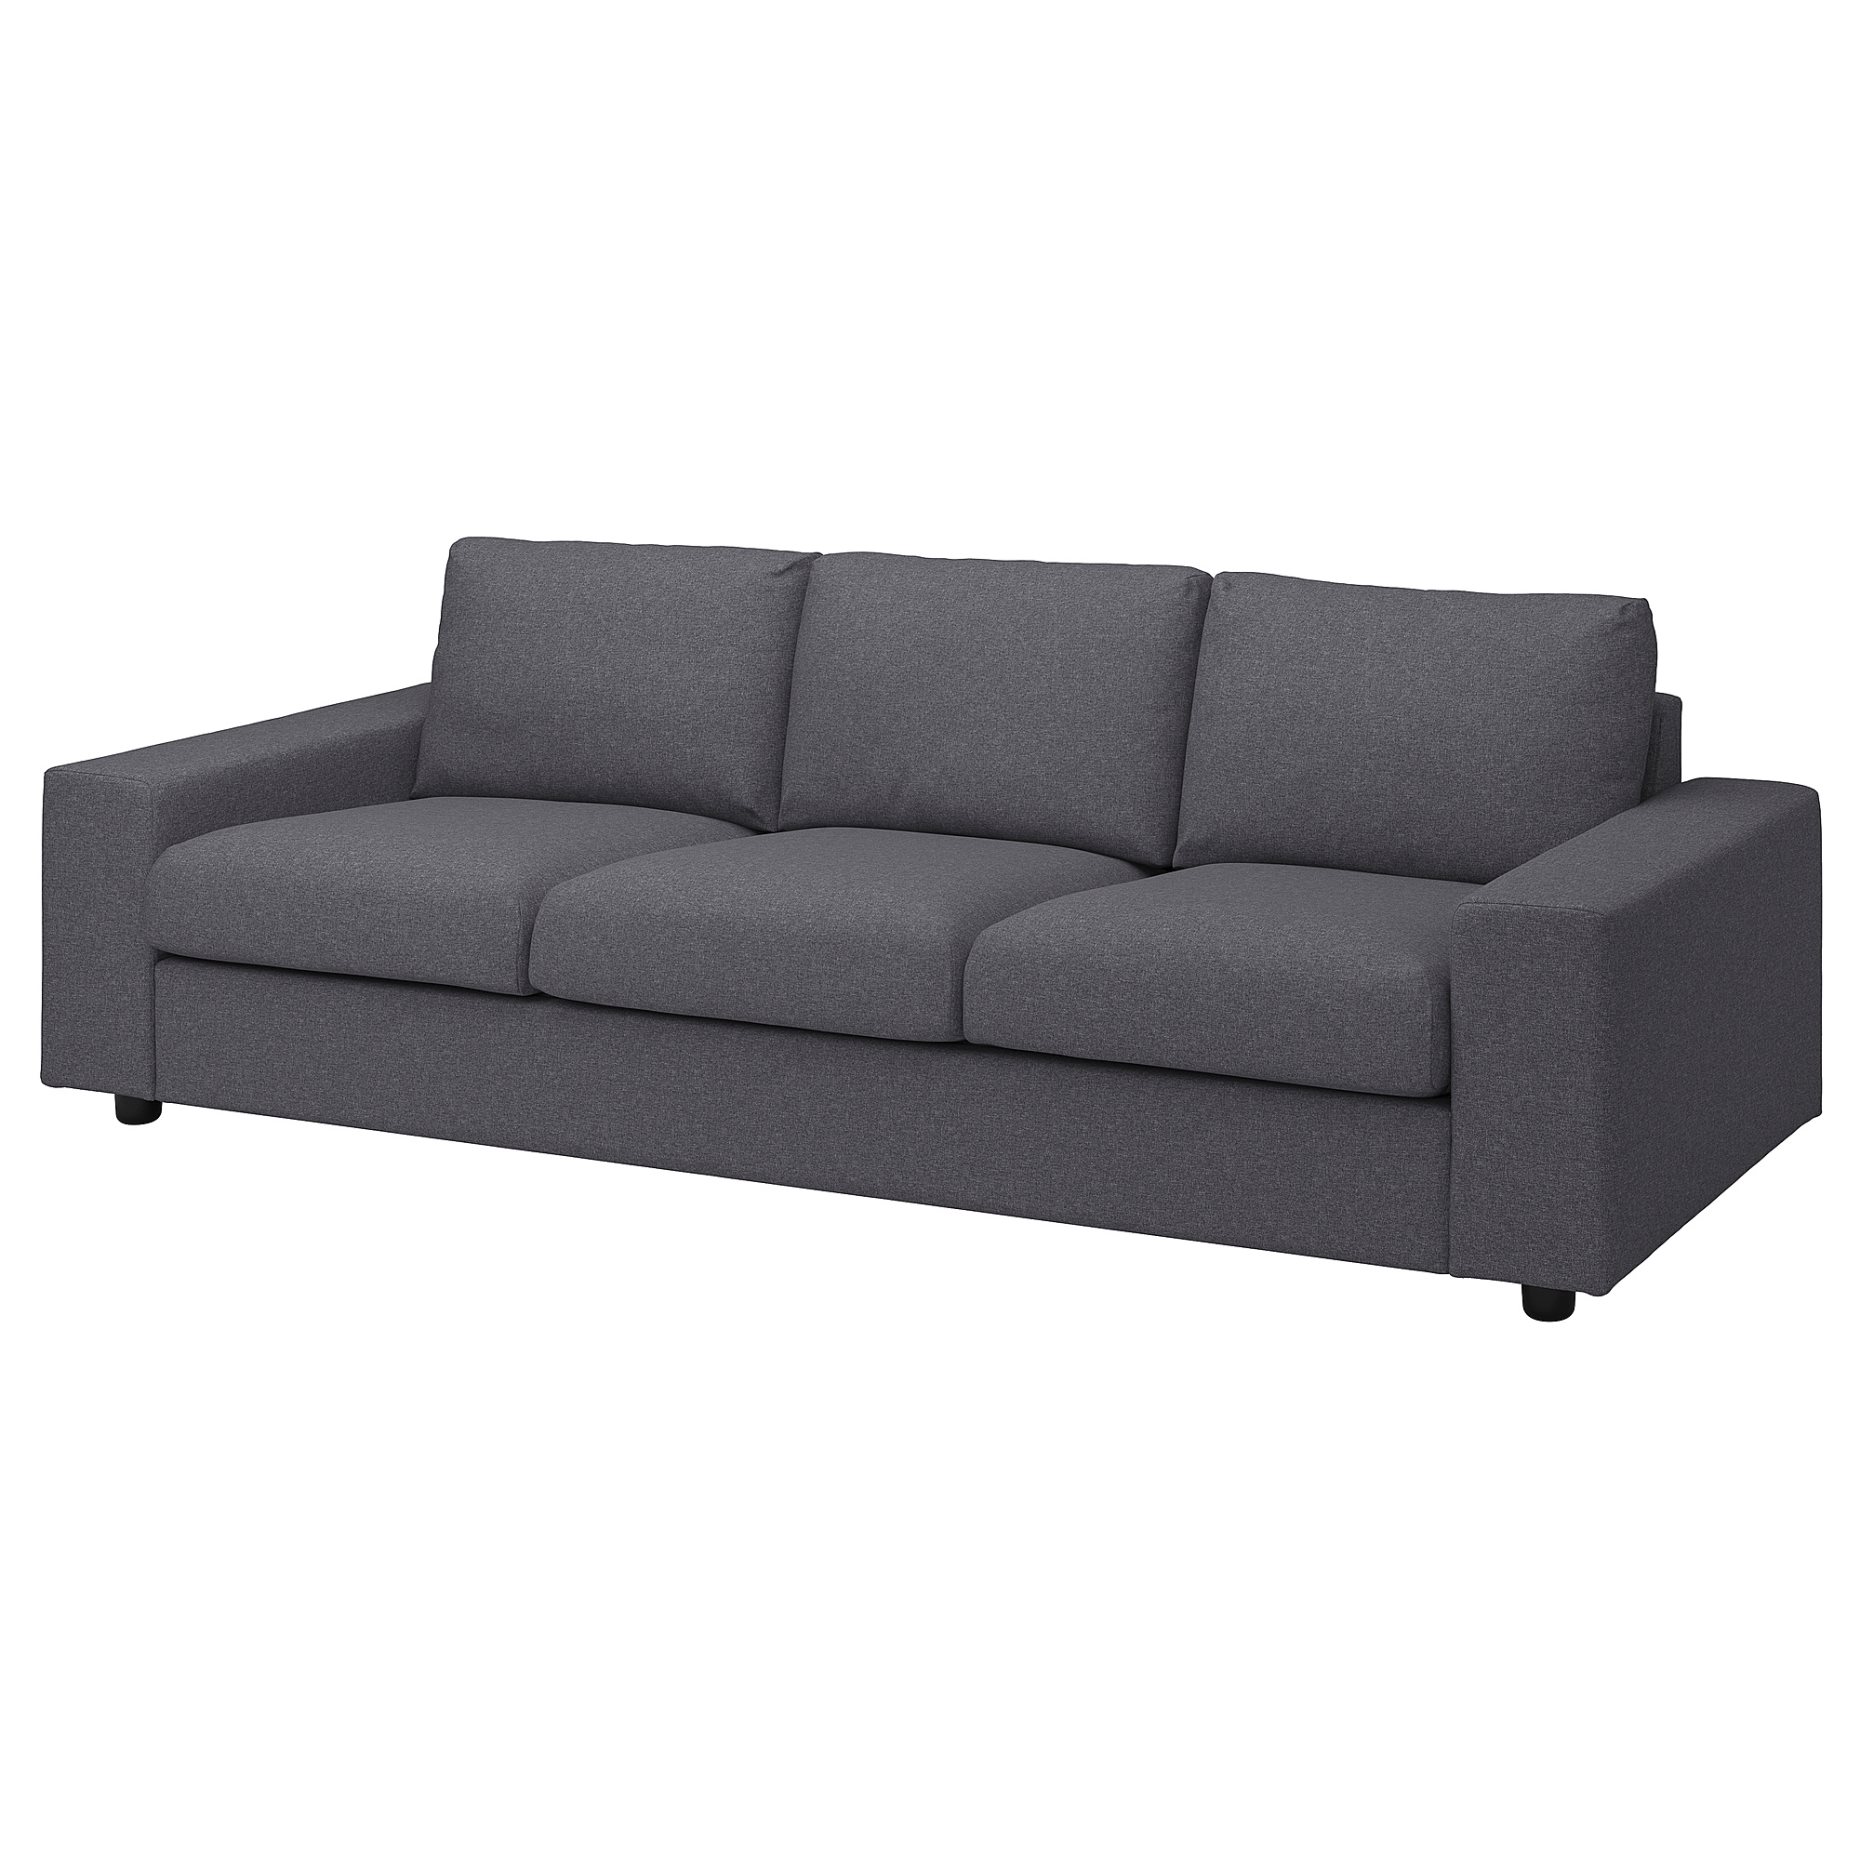 VIMLE, 3-seat sofa, 194.013.33